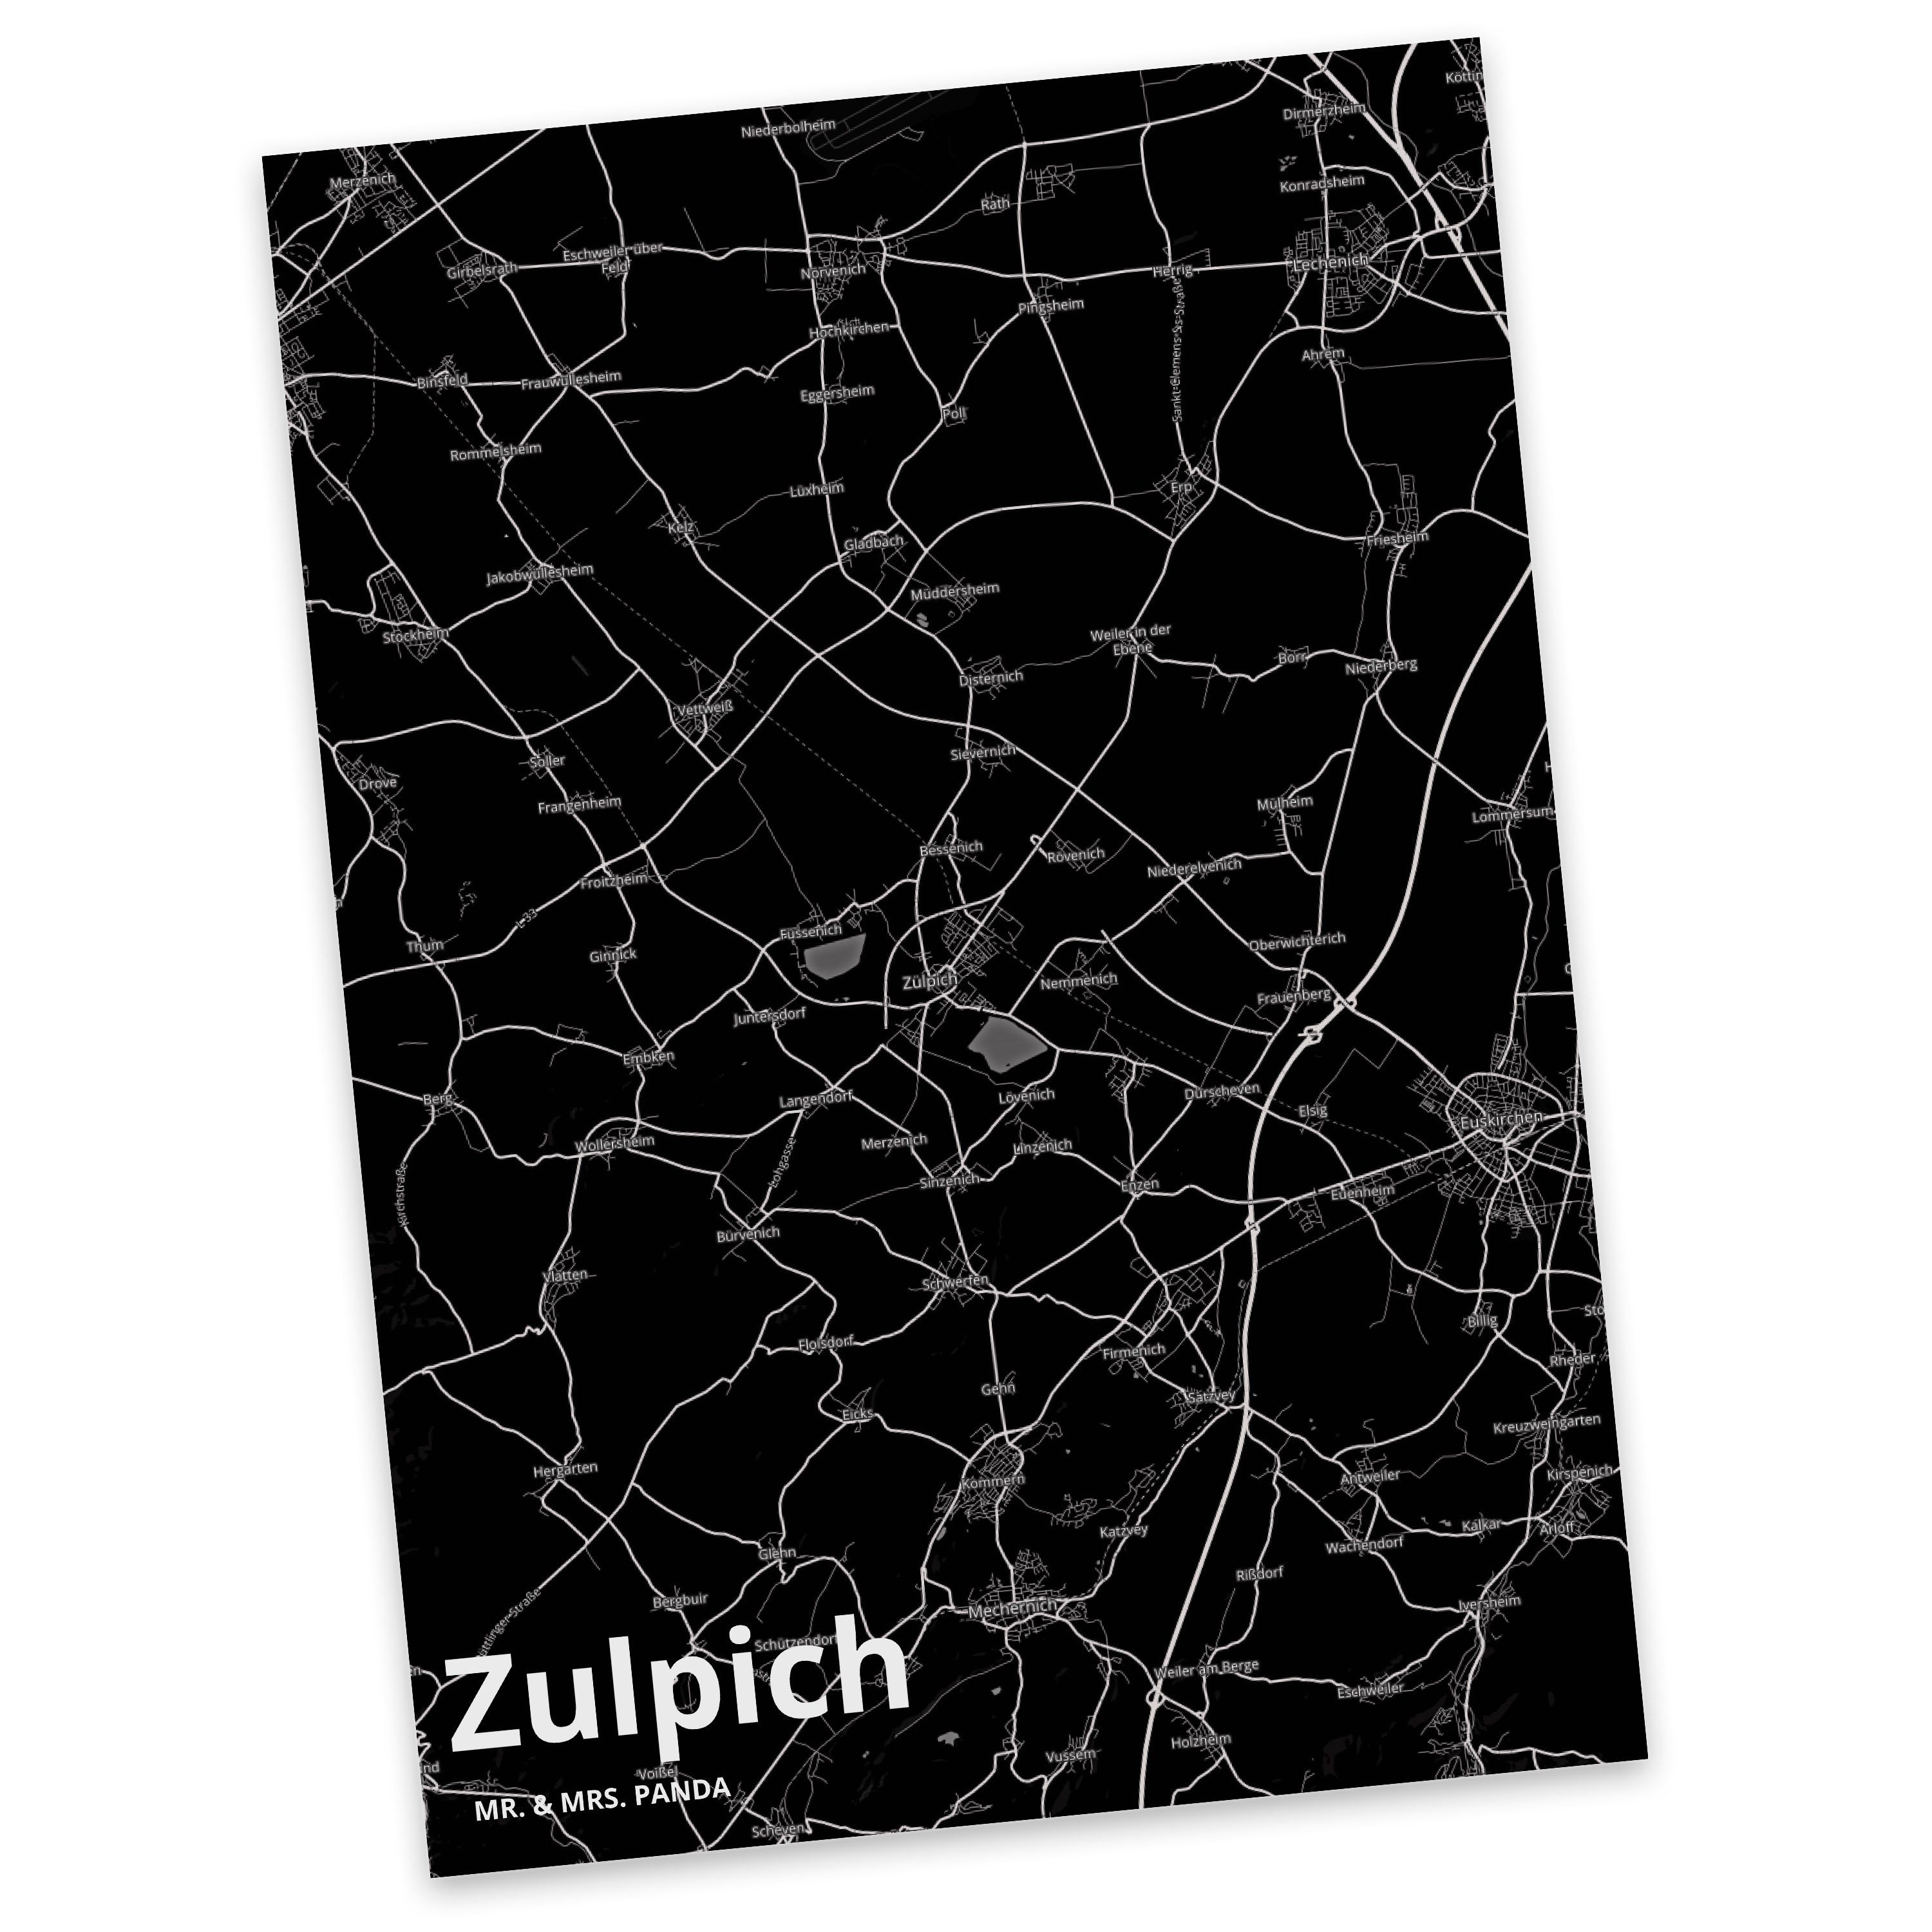 Mr. & Mrs. Panda Postkarte Zulpich - Geschenk, Städte, Stadt Dorf Karte Landkarte Map Stadtplan